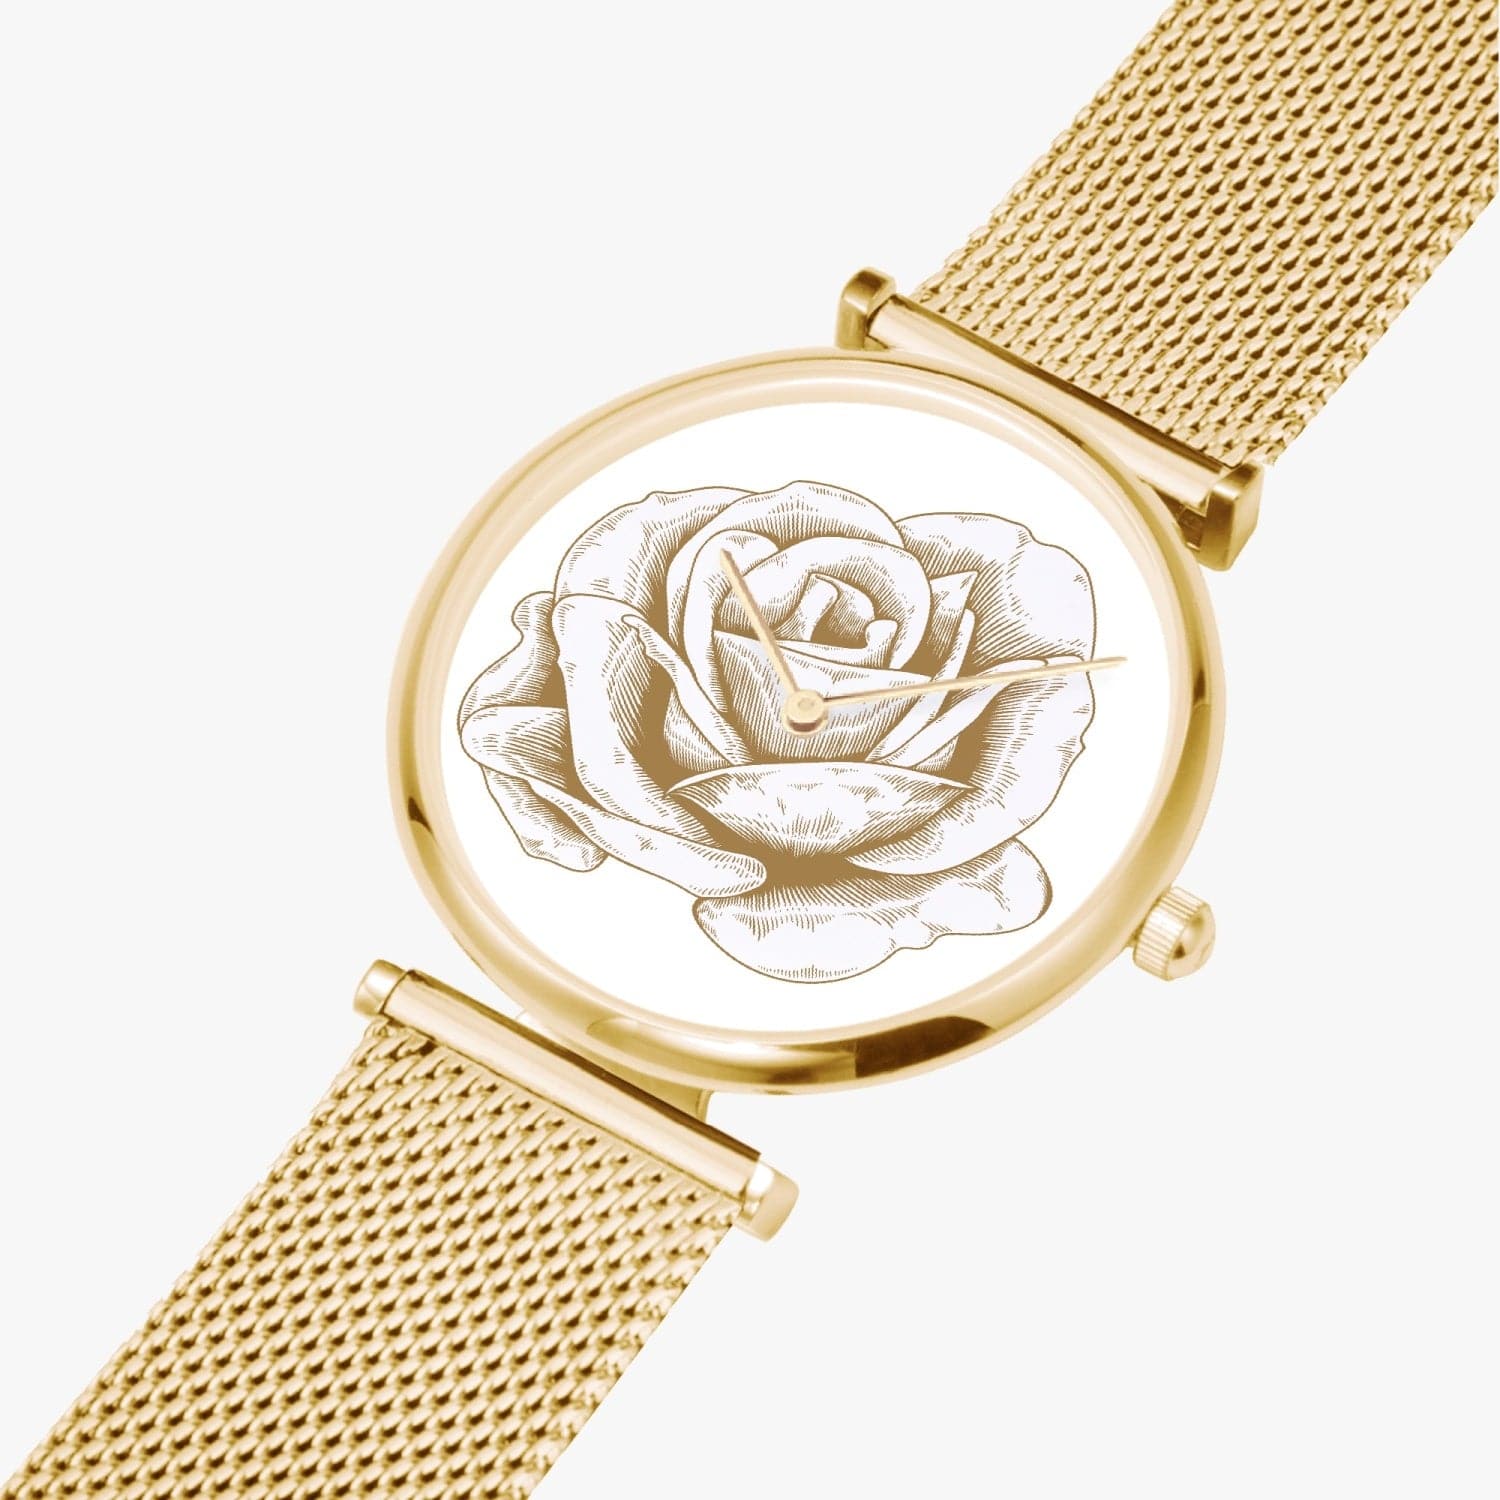 Golden Rose, Bridal gift,  New Stylish Ultra-Thin Quartz Watch, by Sensus Studio Design